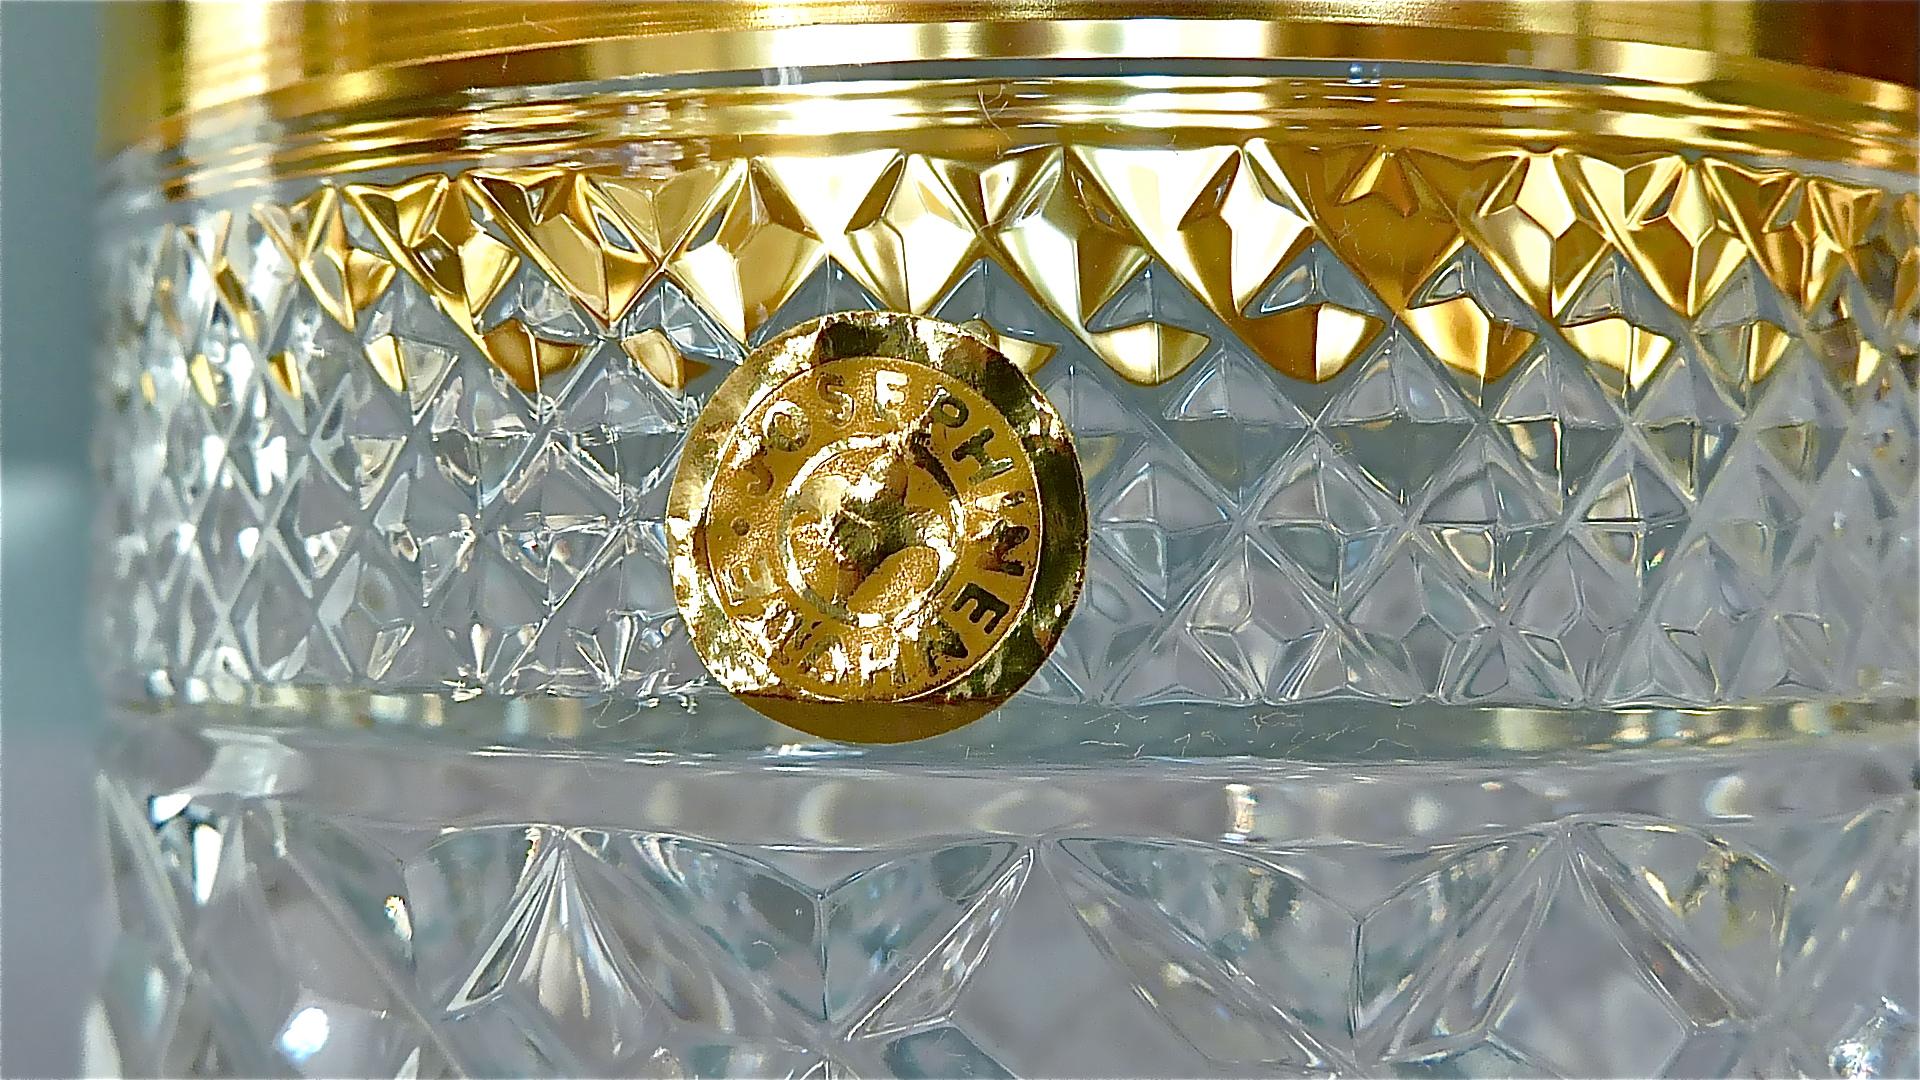 Hollywood Regency Precious 6 Whisky Glasses Gold Crystal Glass Tumbler Josephinenhuette Moser